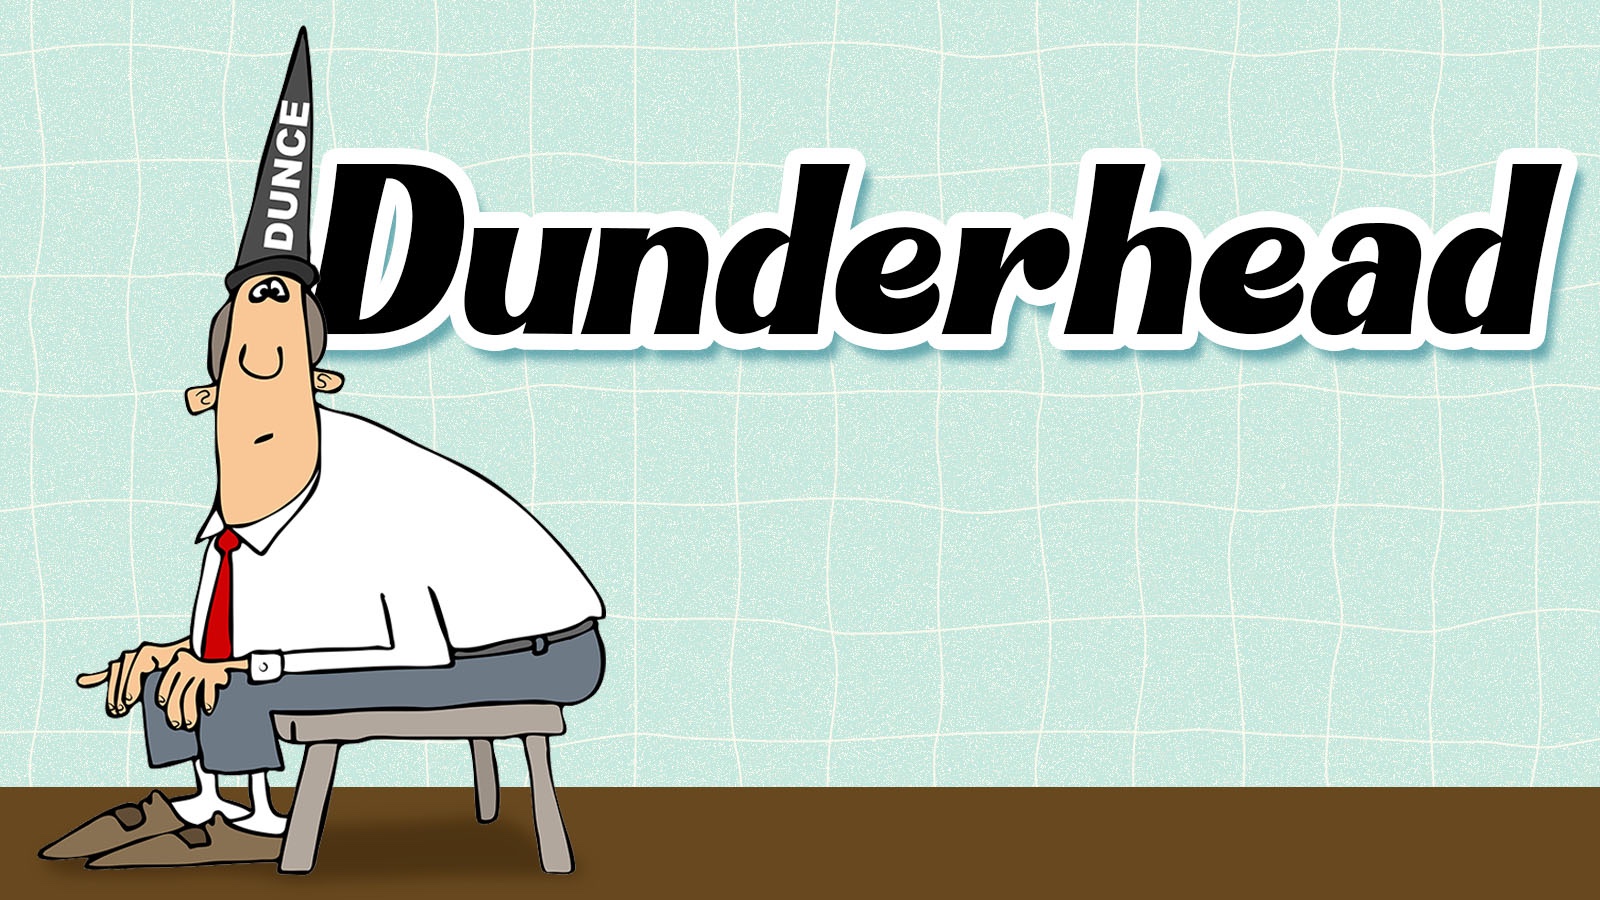 dunderhead slang for word games